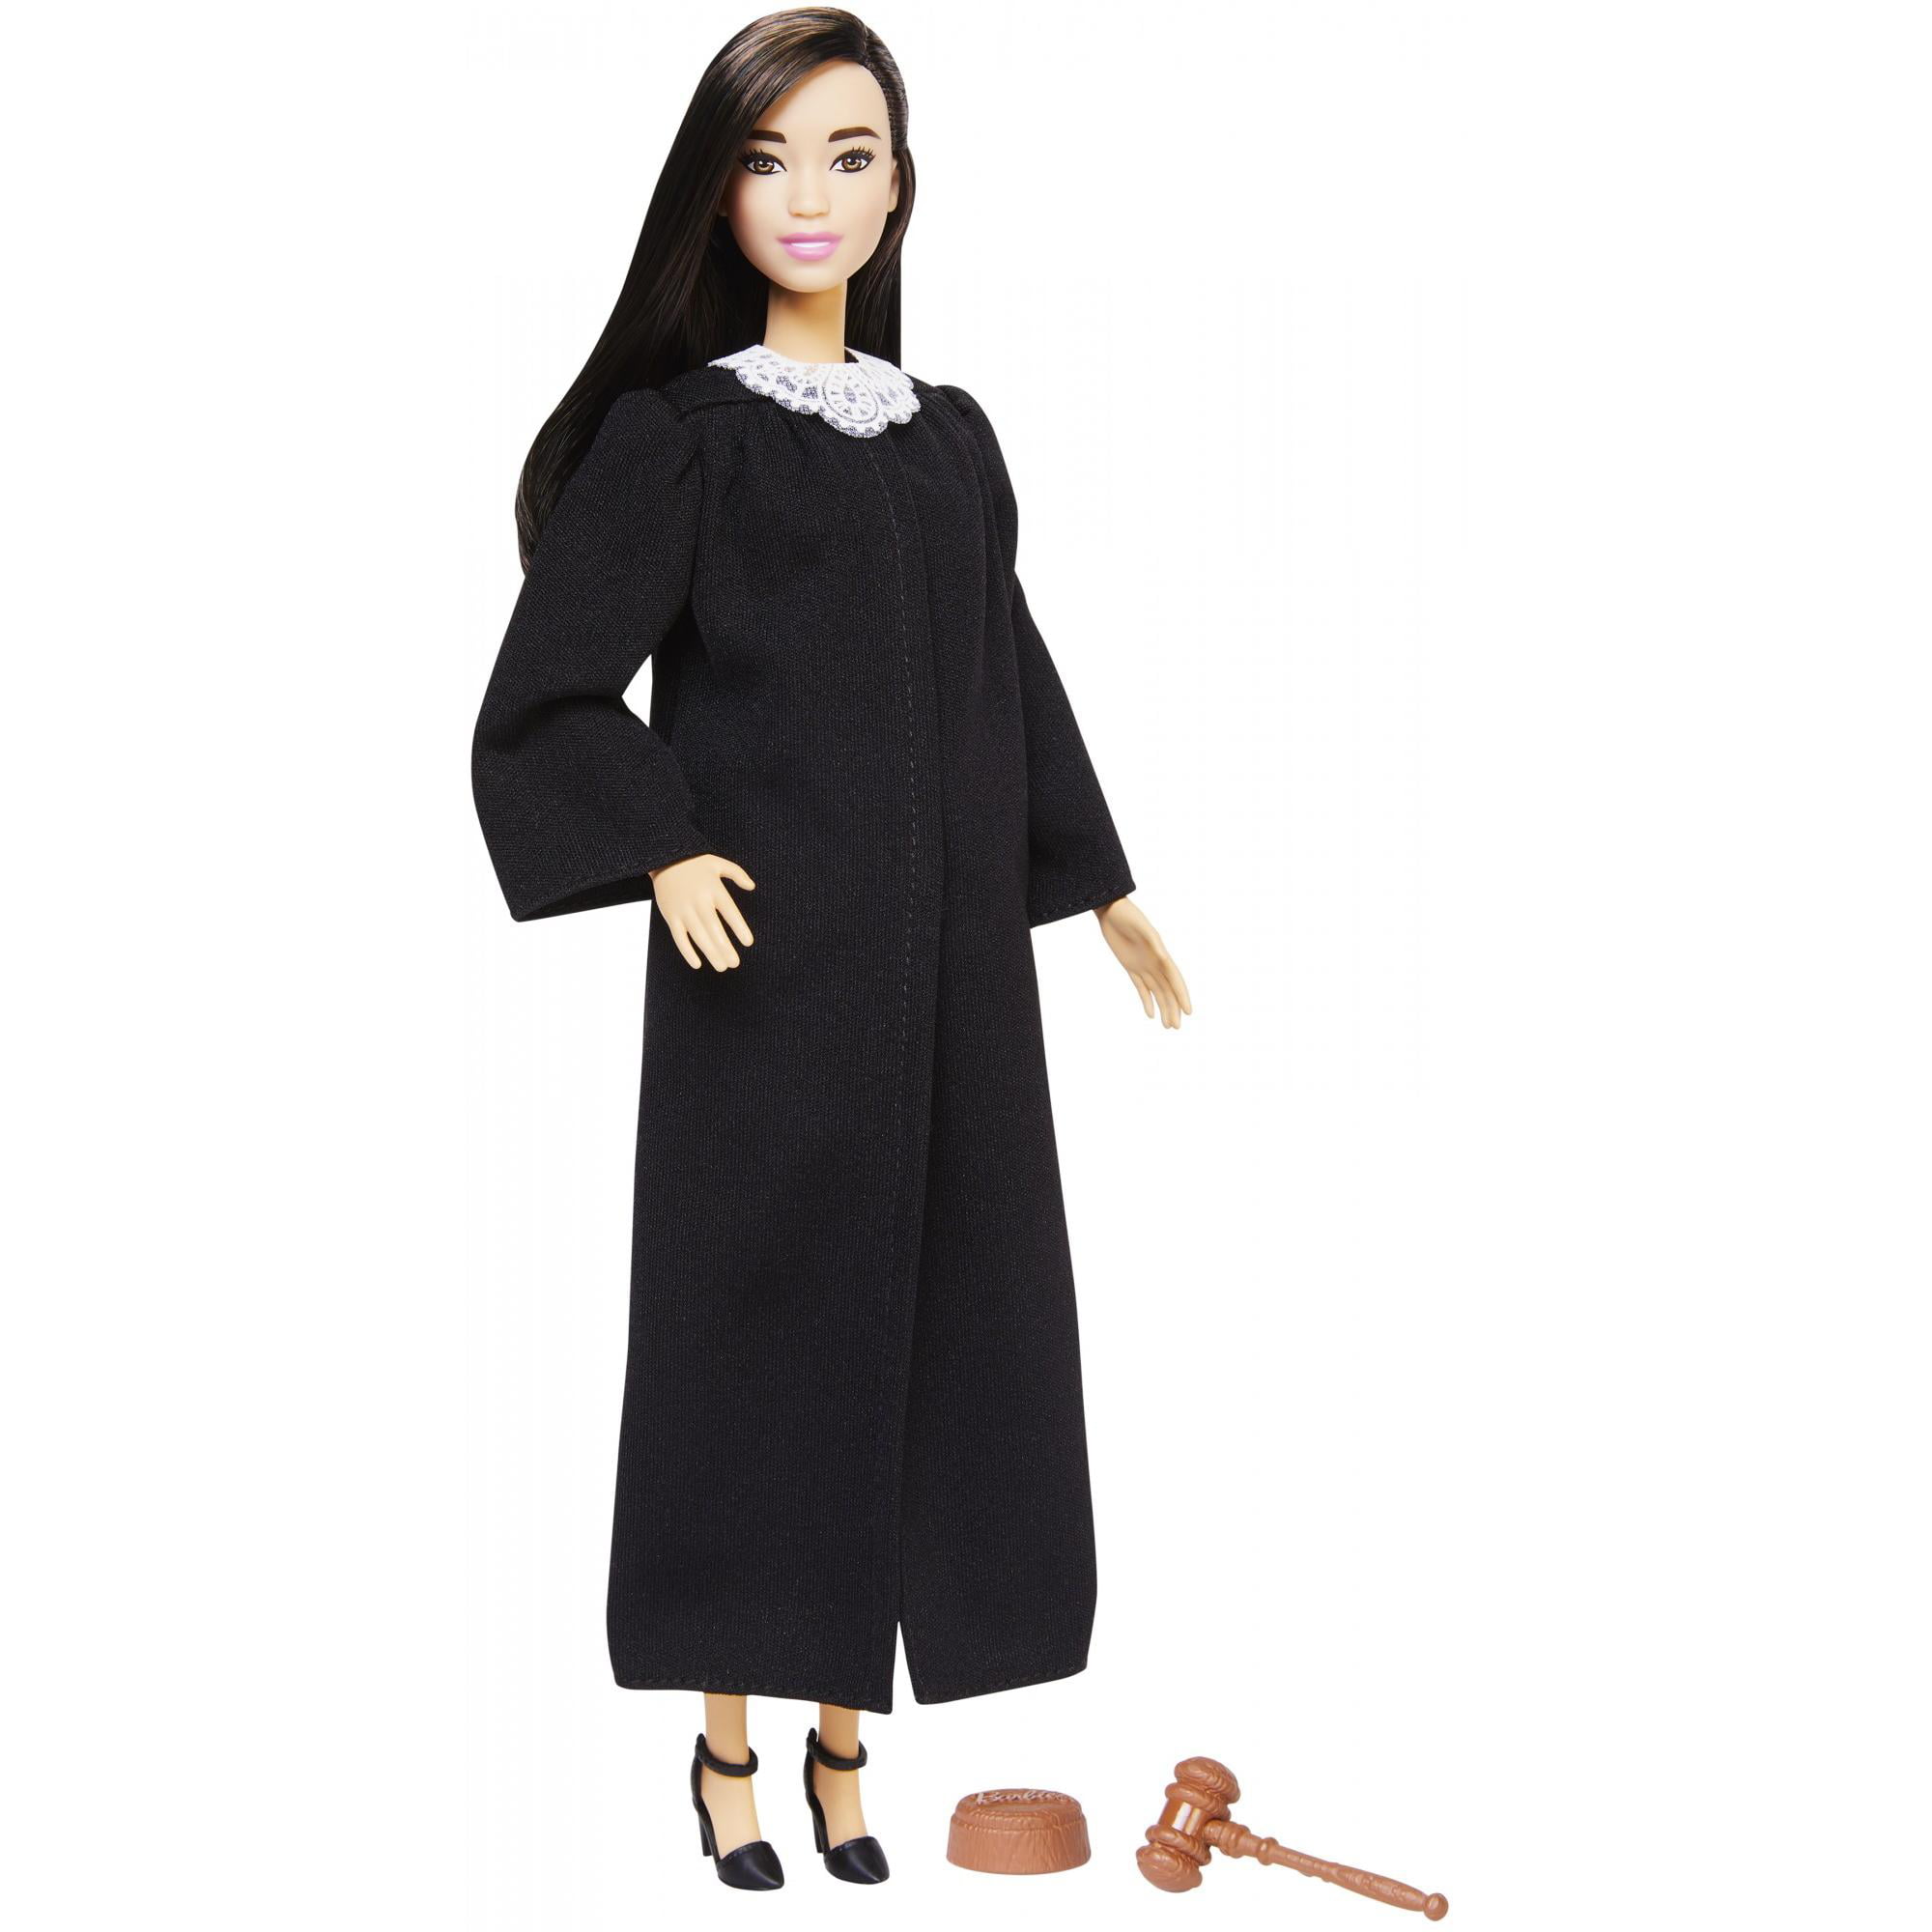 Barbie Career Of The Year Judge Doll Dark Brown Hair  islamiyyatcom